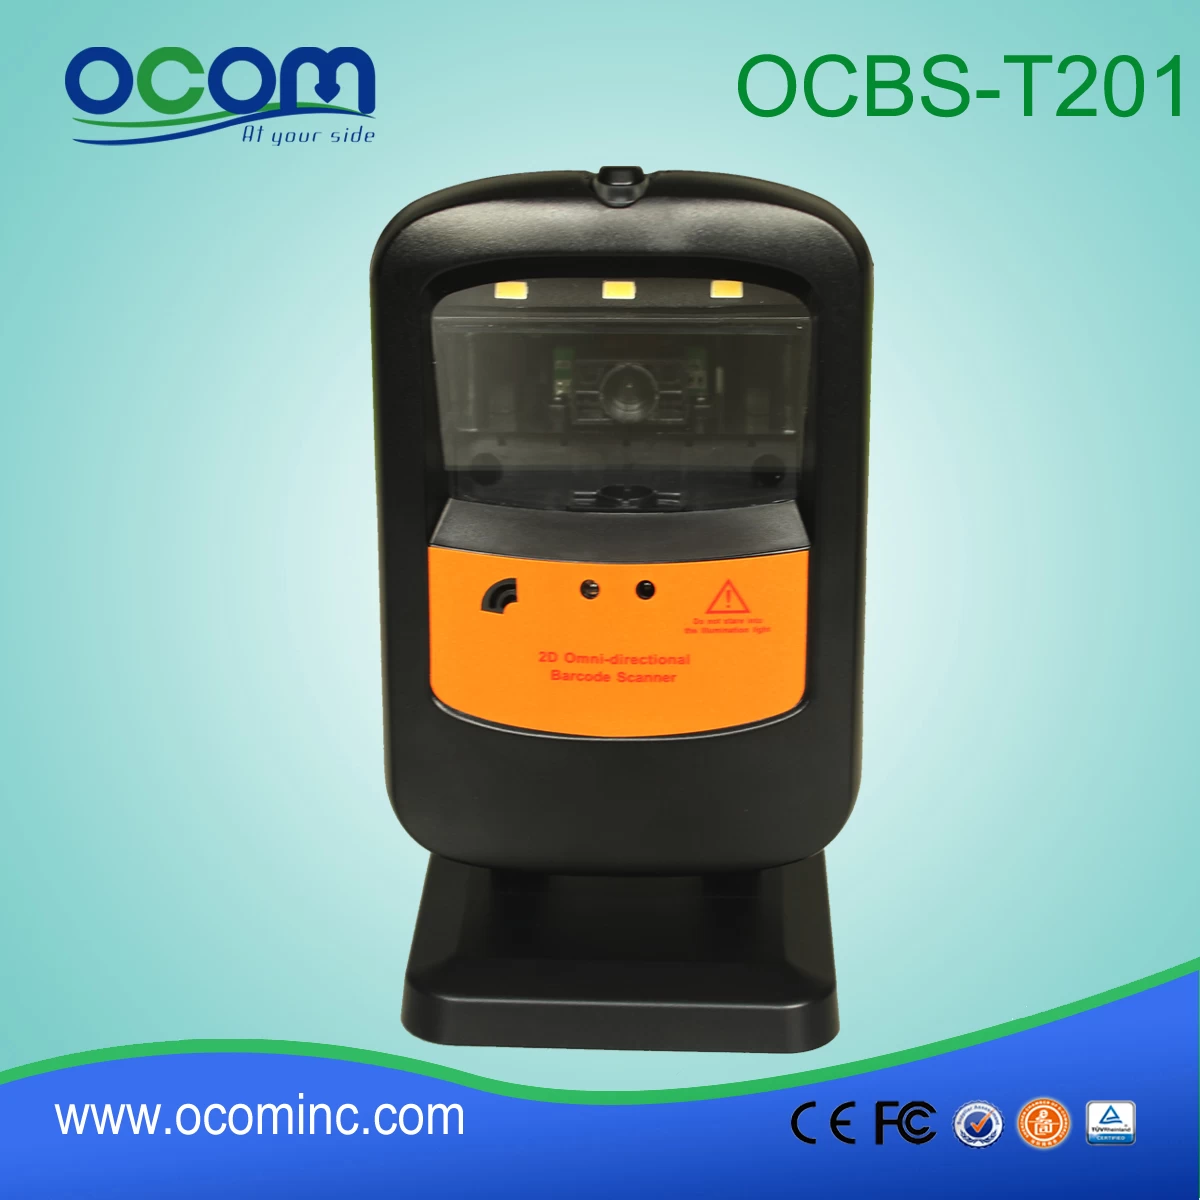 OCBS-T201:barcode scanner supplier philippines, 2d barcode scanner module